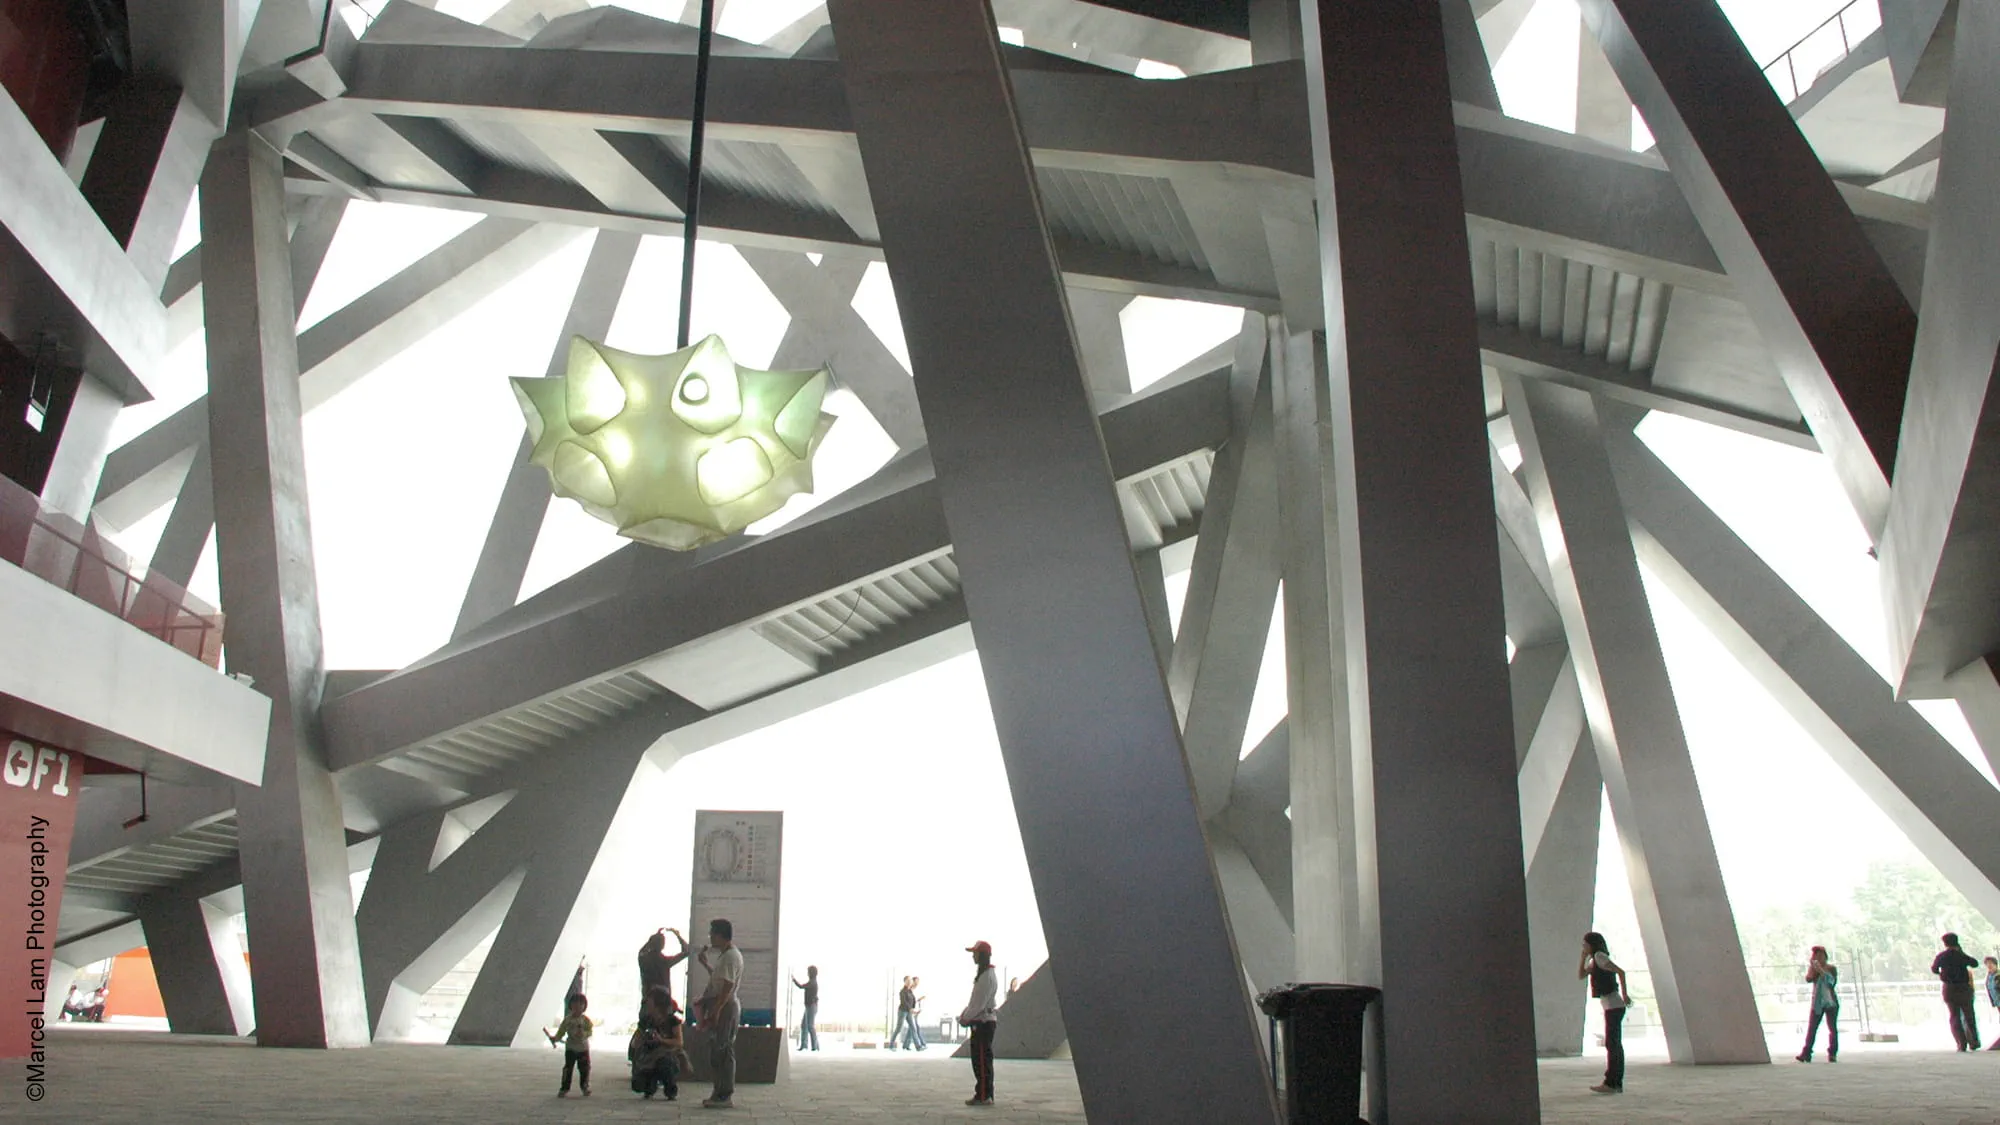 National Stadium, Beijing (Bird's Nest) - interior view showing the structure